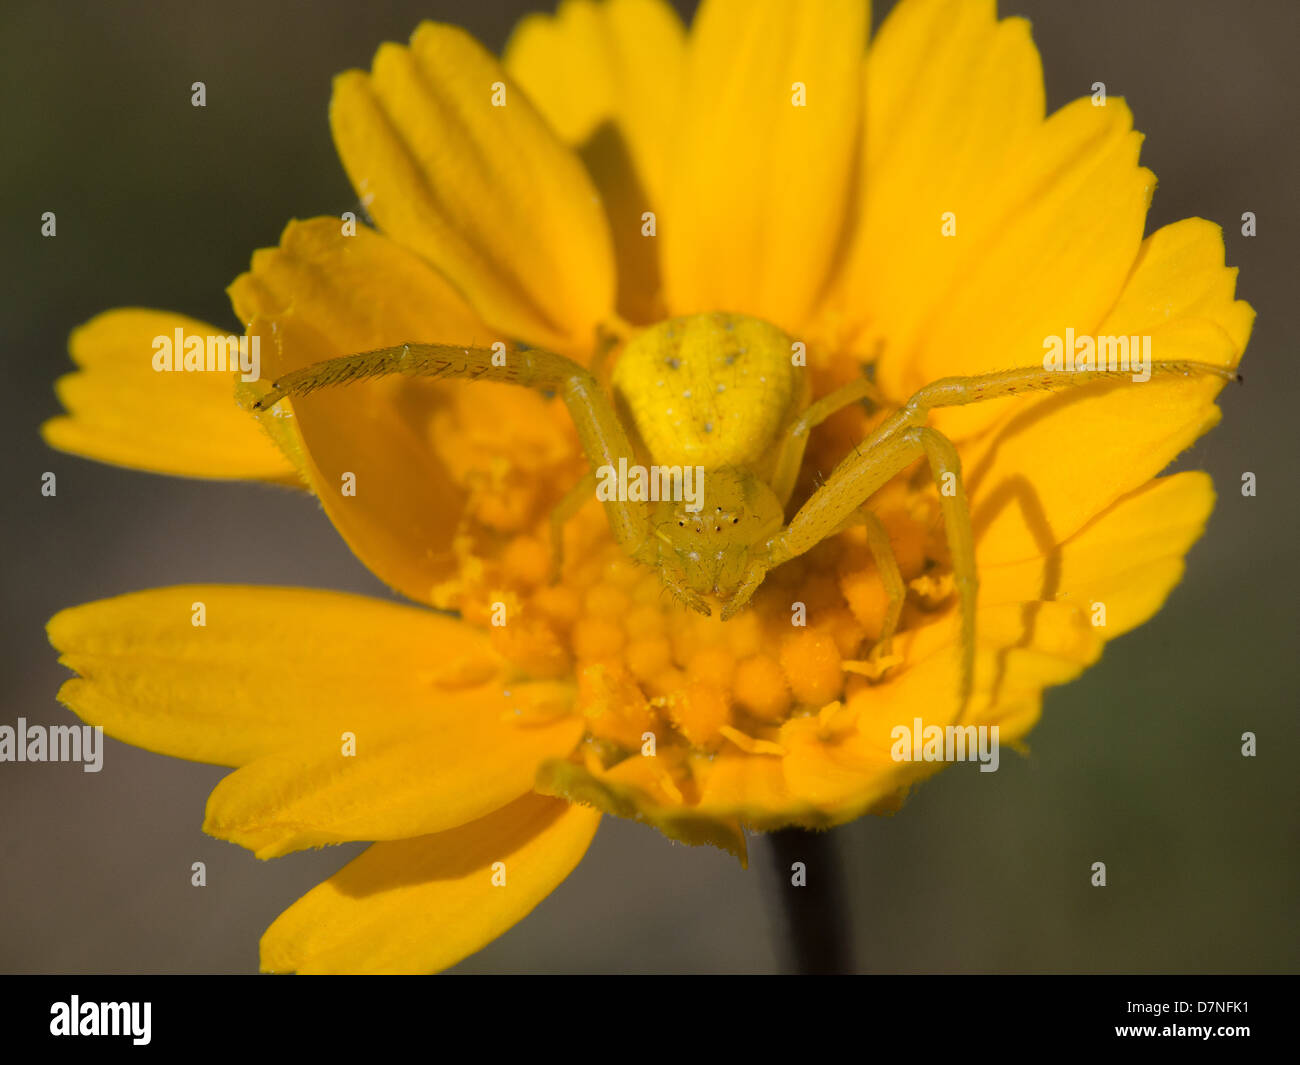 Yellow garden spider hiding on a yellow wildflower Stock Photo